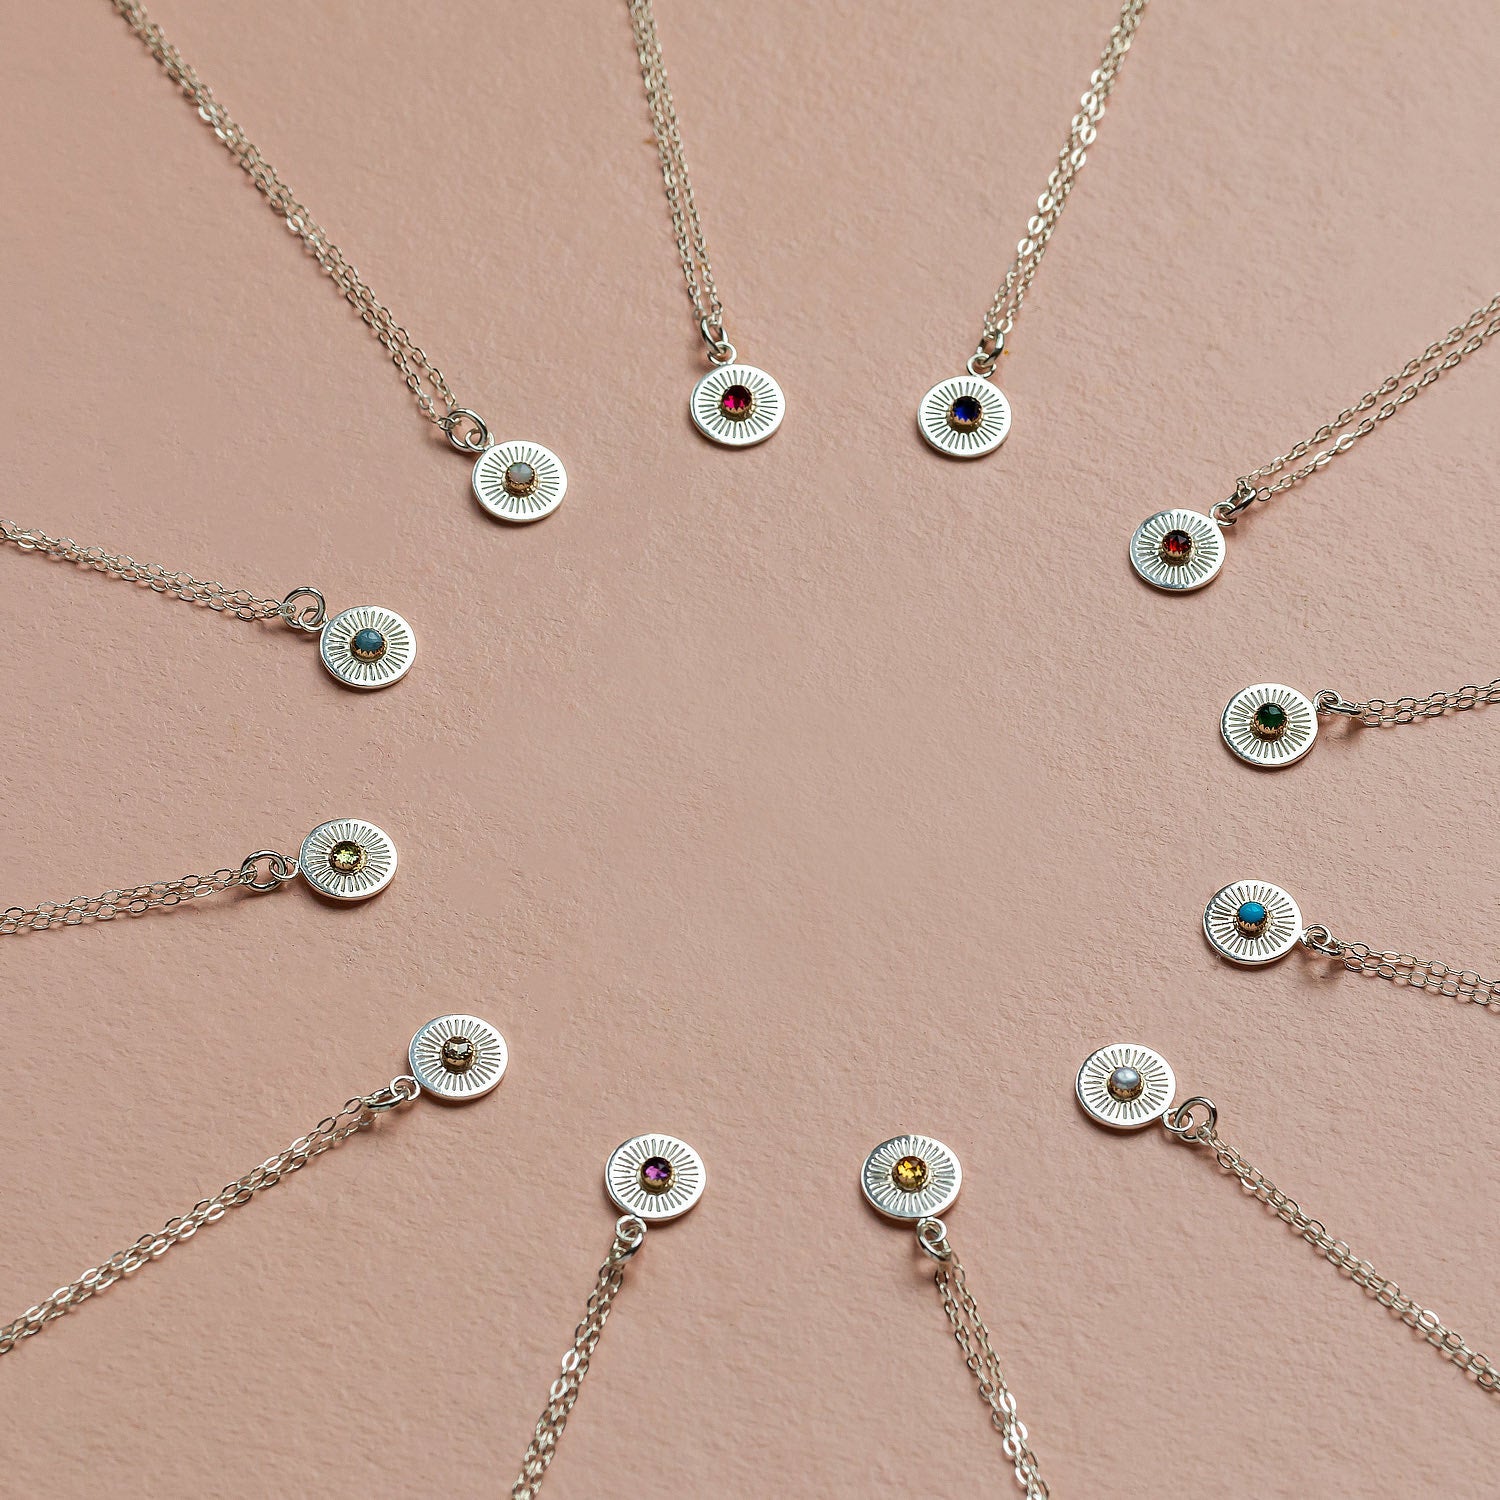 Birthstone silver pendant: pearl - Simone Walsh Jewellery Australia